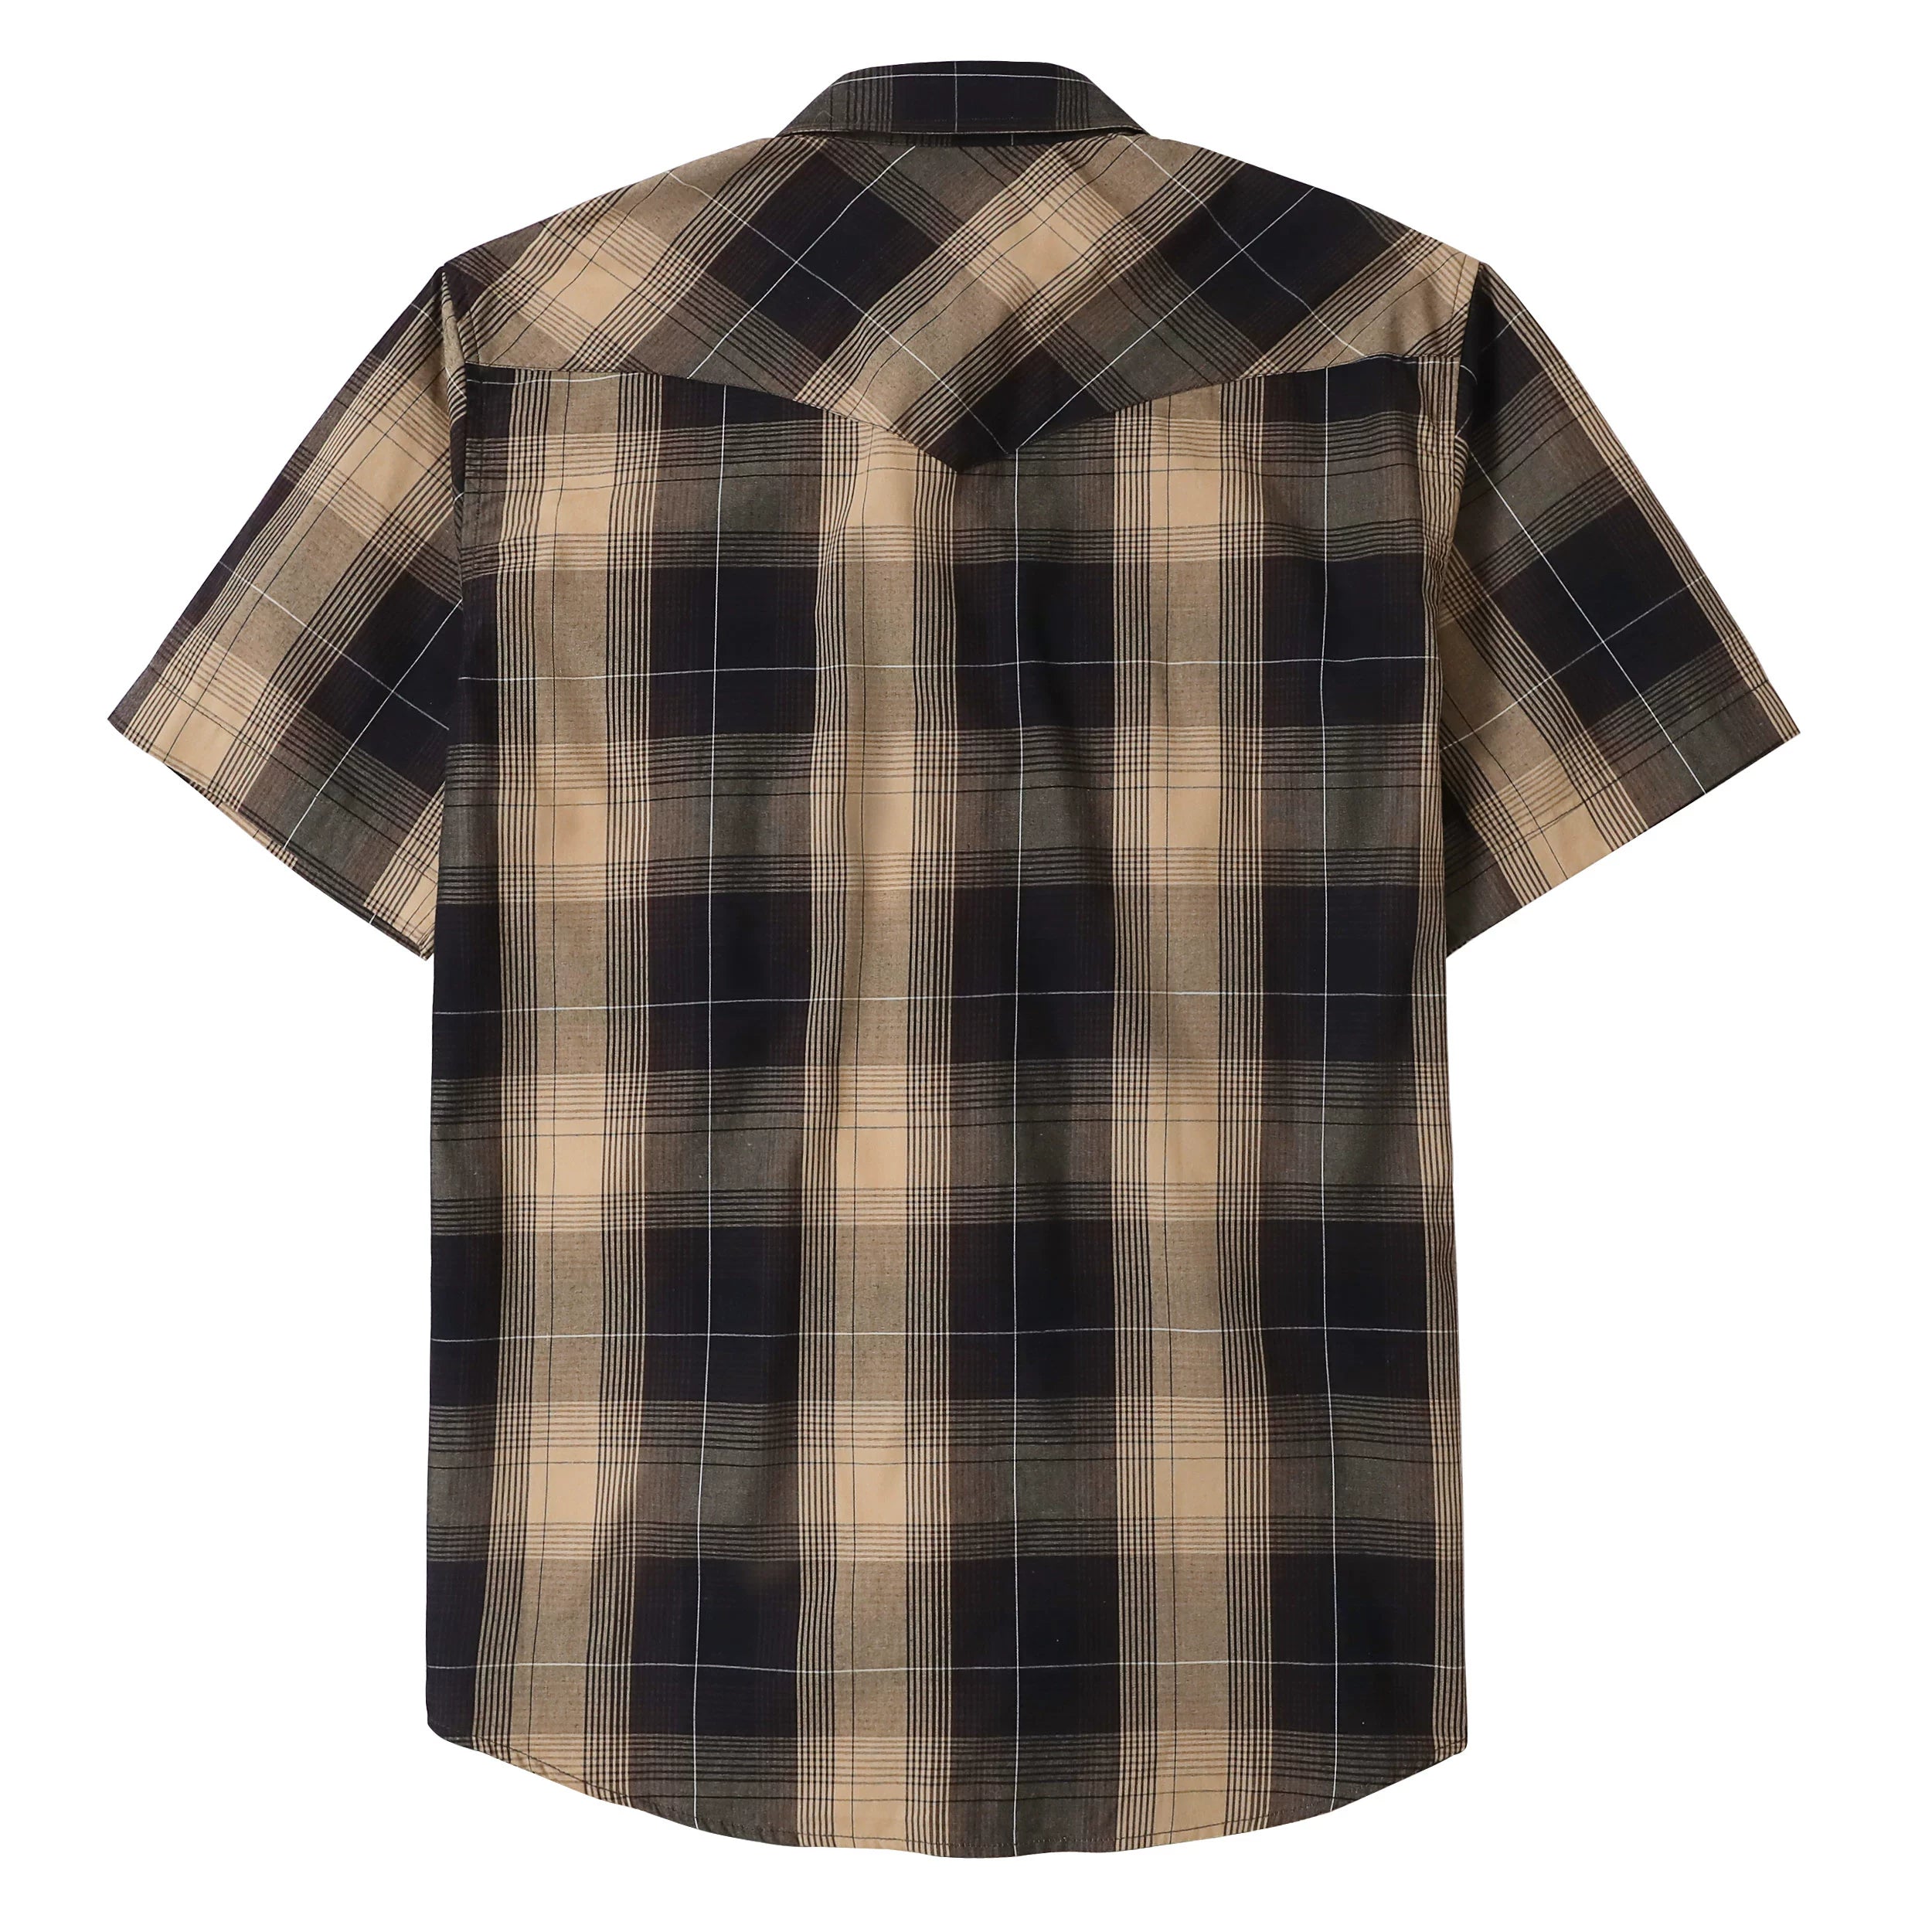 Dubinik® Western Shirts for Men Short Sleeve Plaid Pearl Snap Shirts for Men Button Up Shirt Cowboy Casual Work Shirt#41027